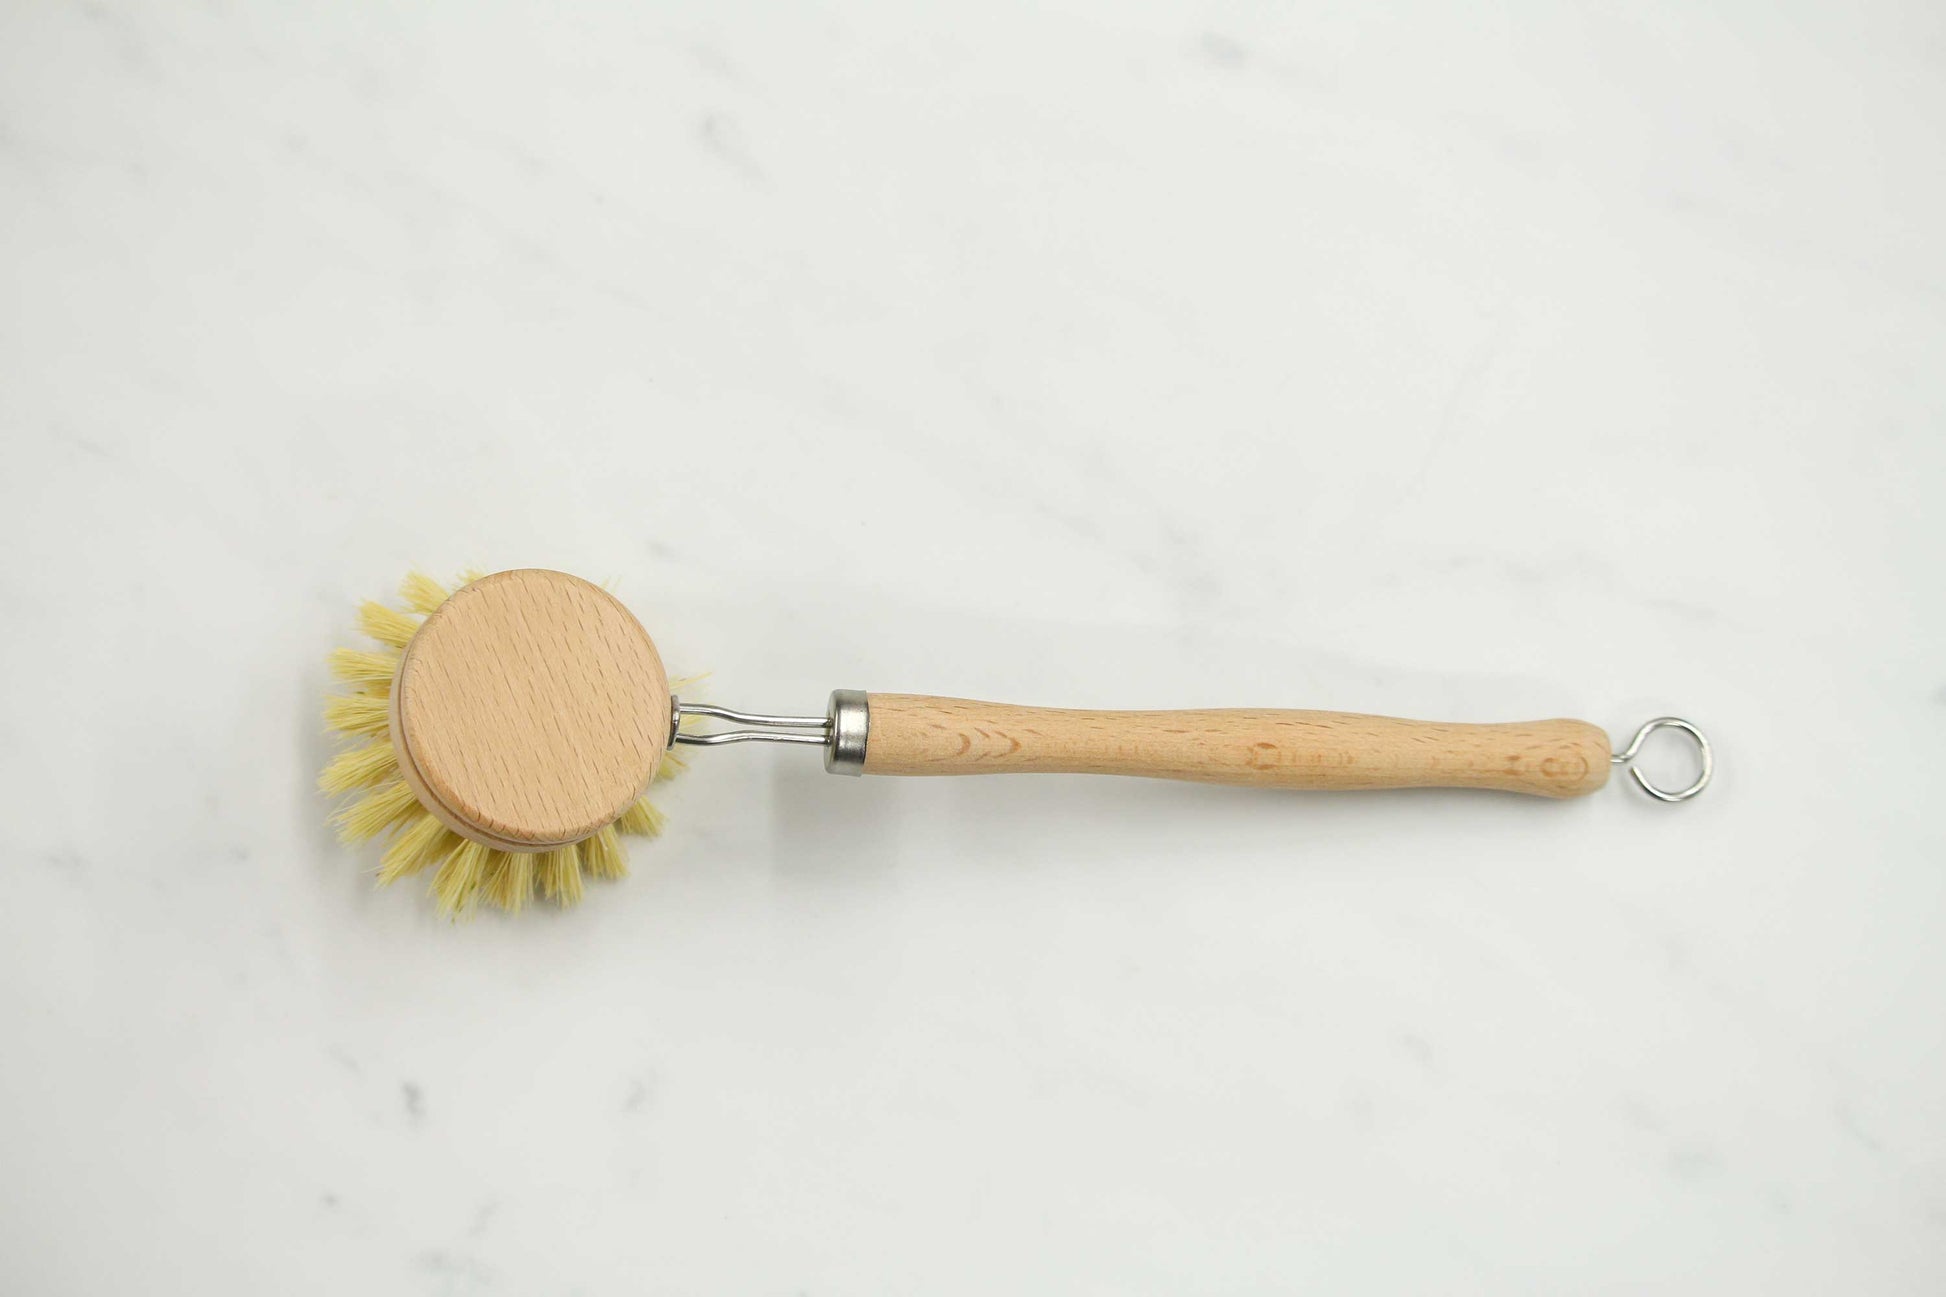 Dish brush with sisal fiber bristles and beech wood handle